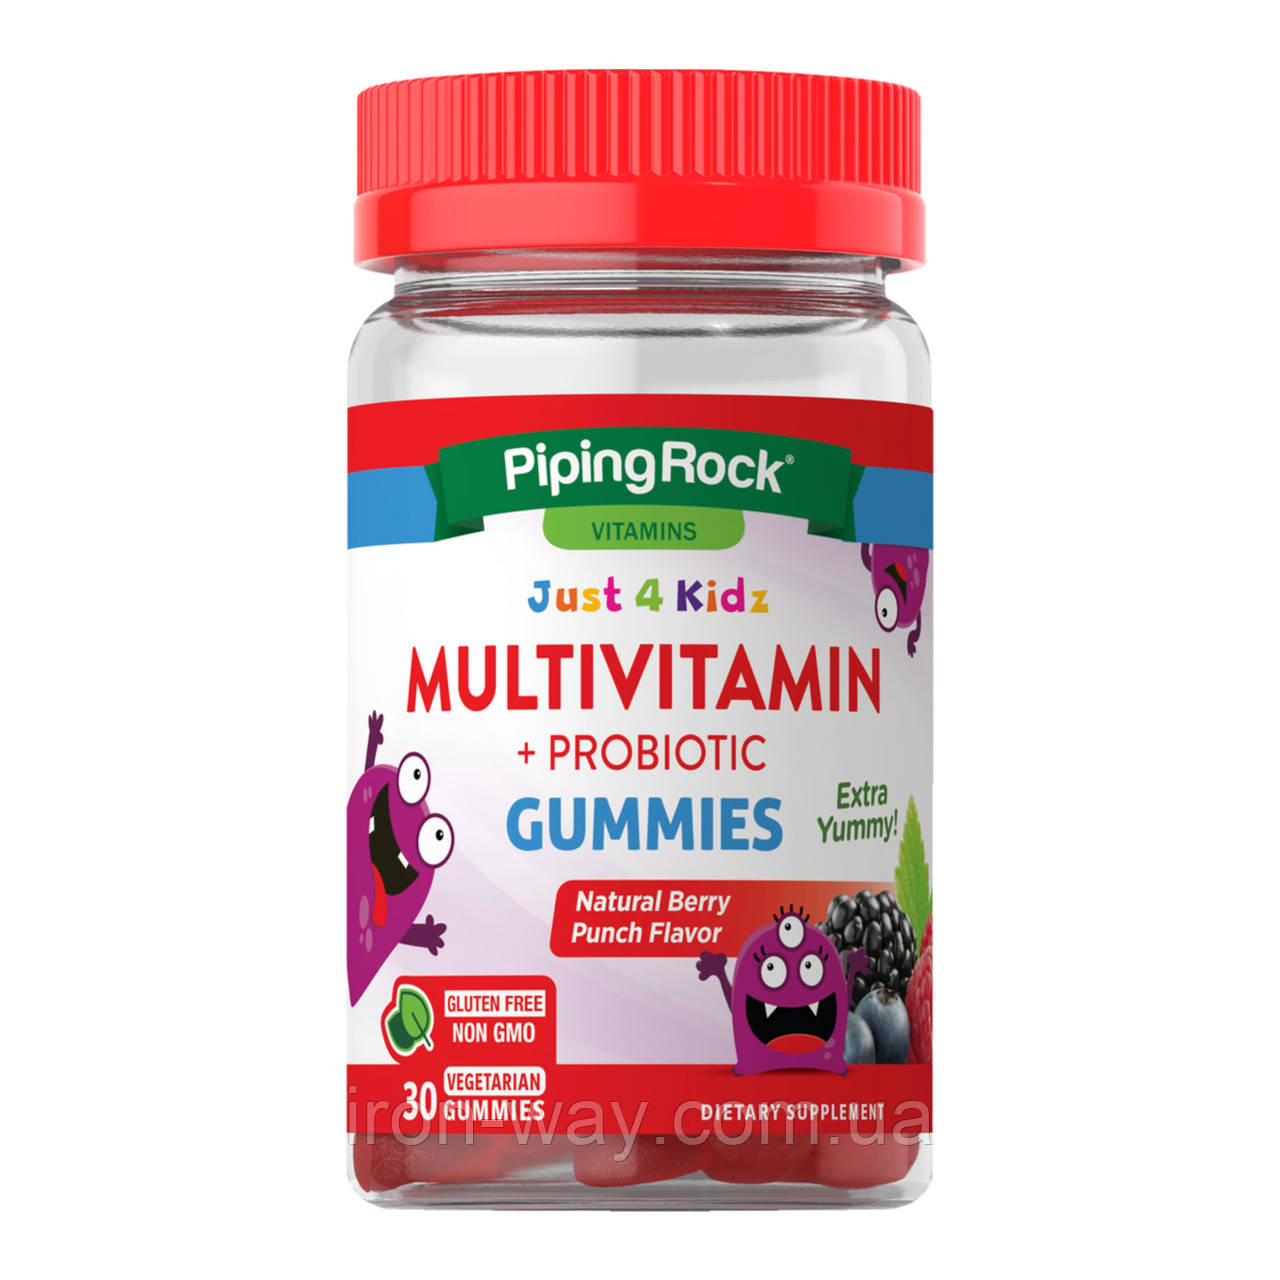 Multivitamin+probiotic gummies - 30 gummies